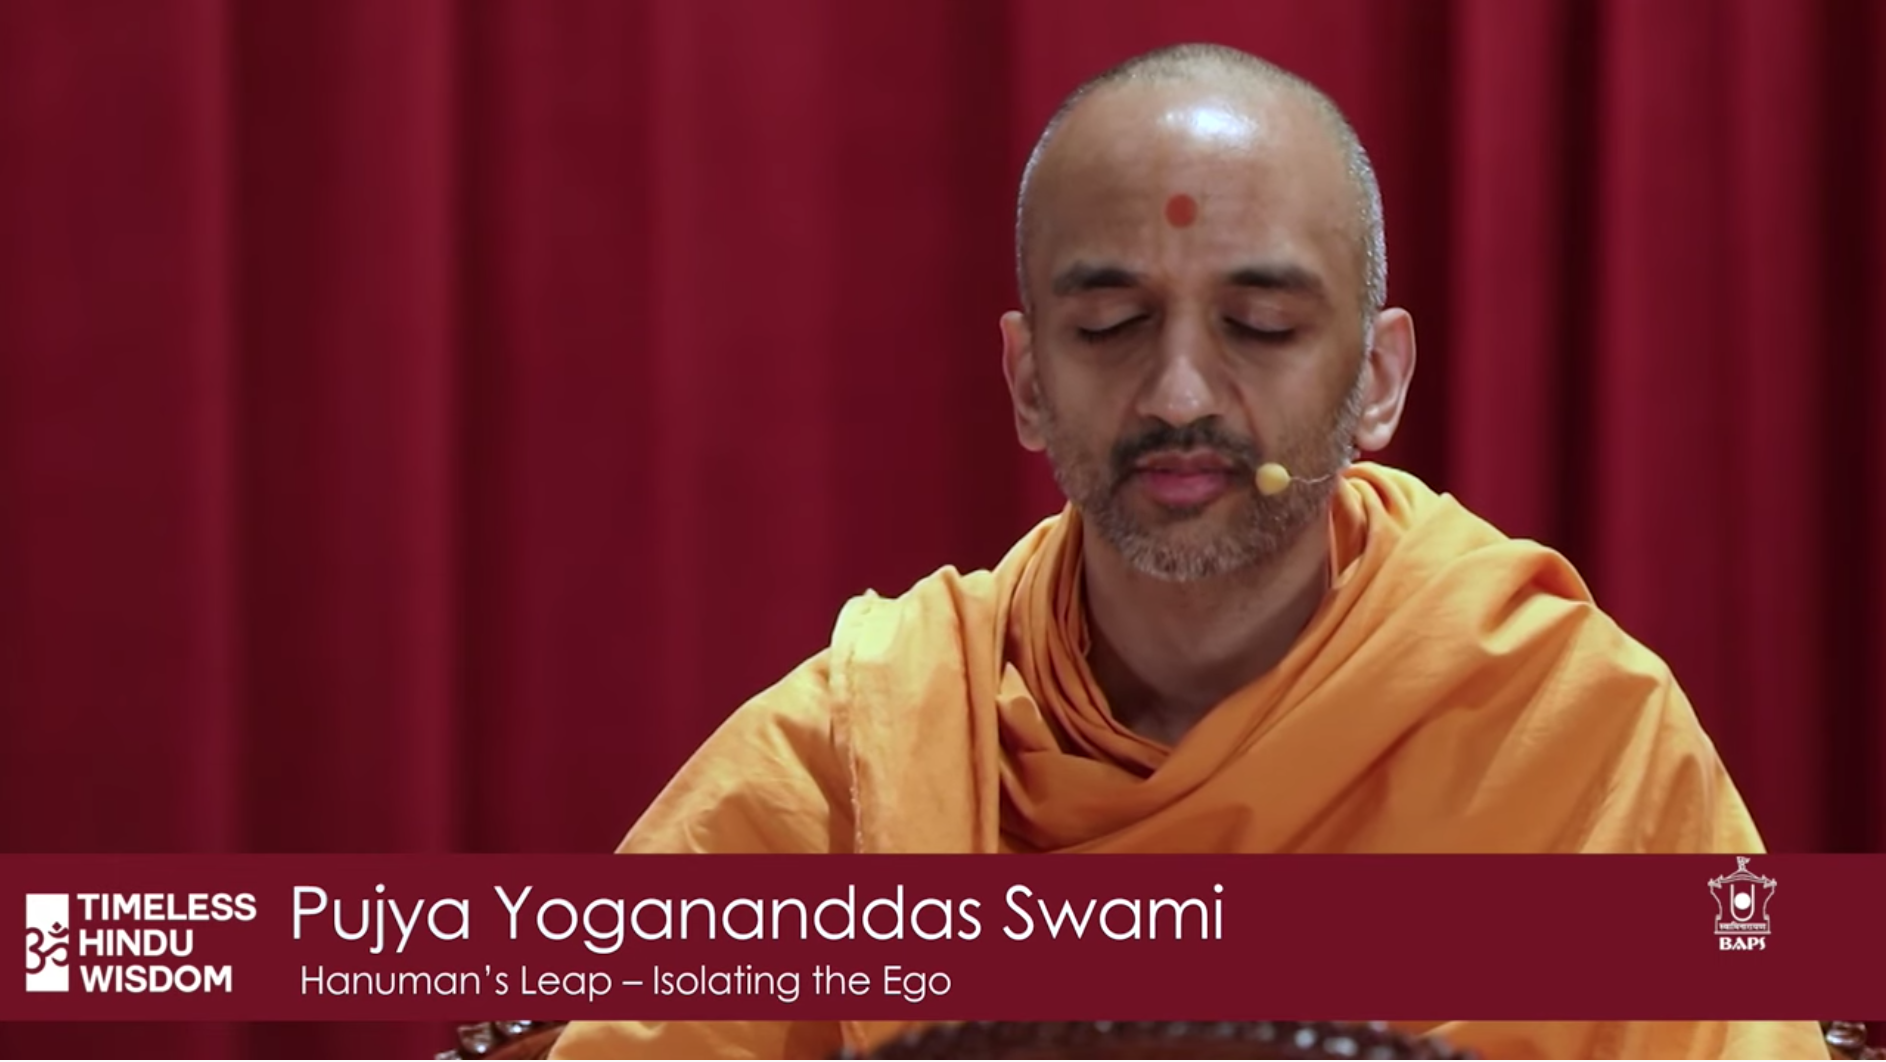 Yogaananddas Swami Hanuman second Part